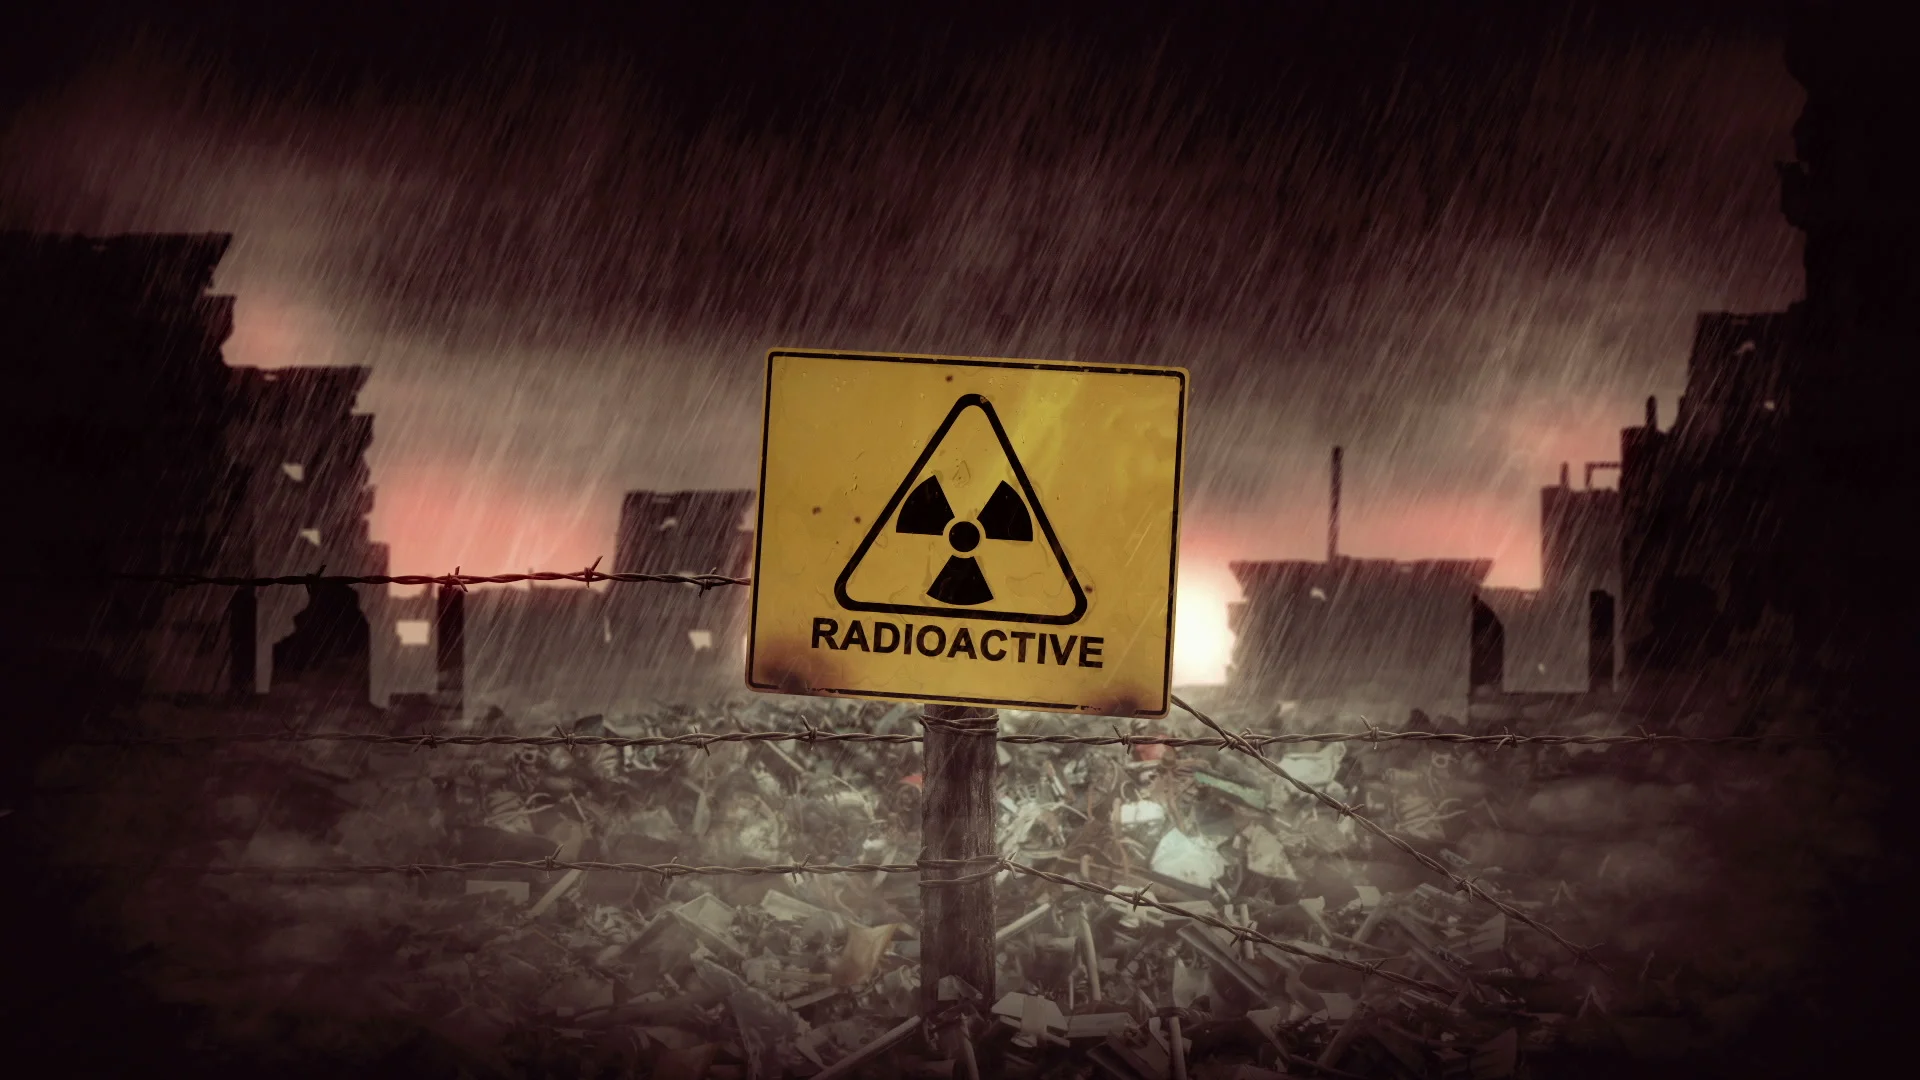 radiation hazard symbol